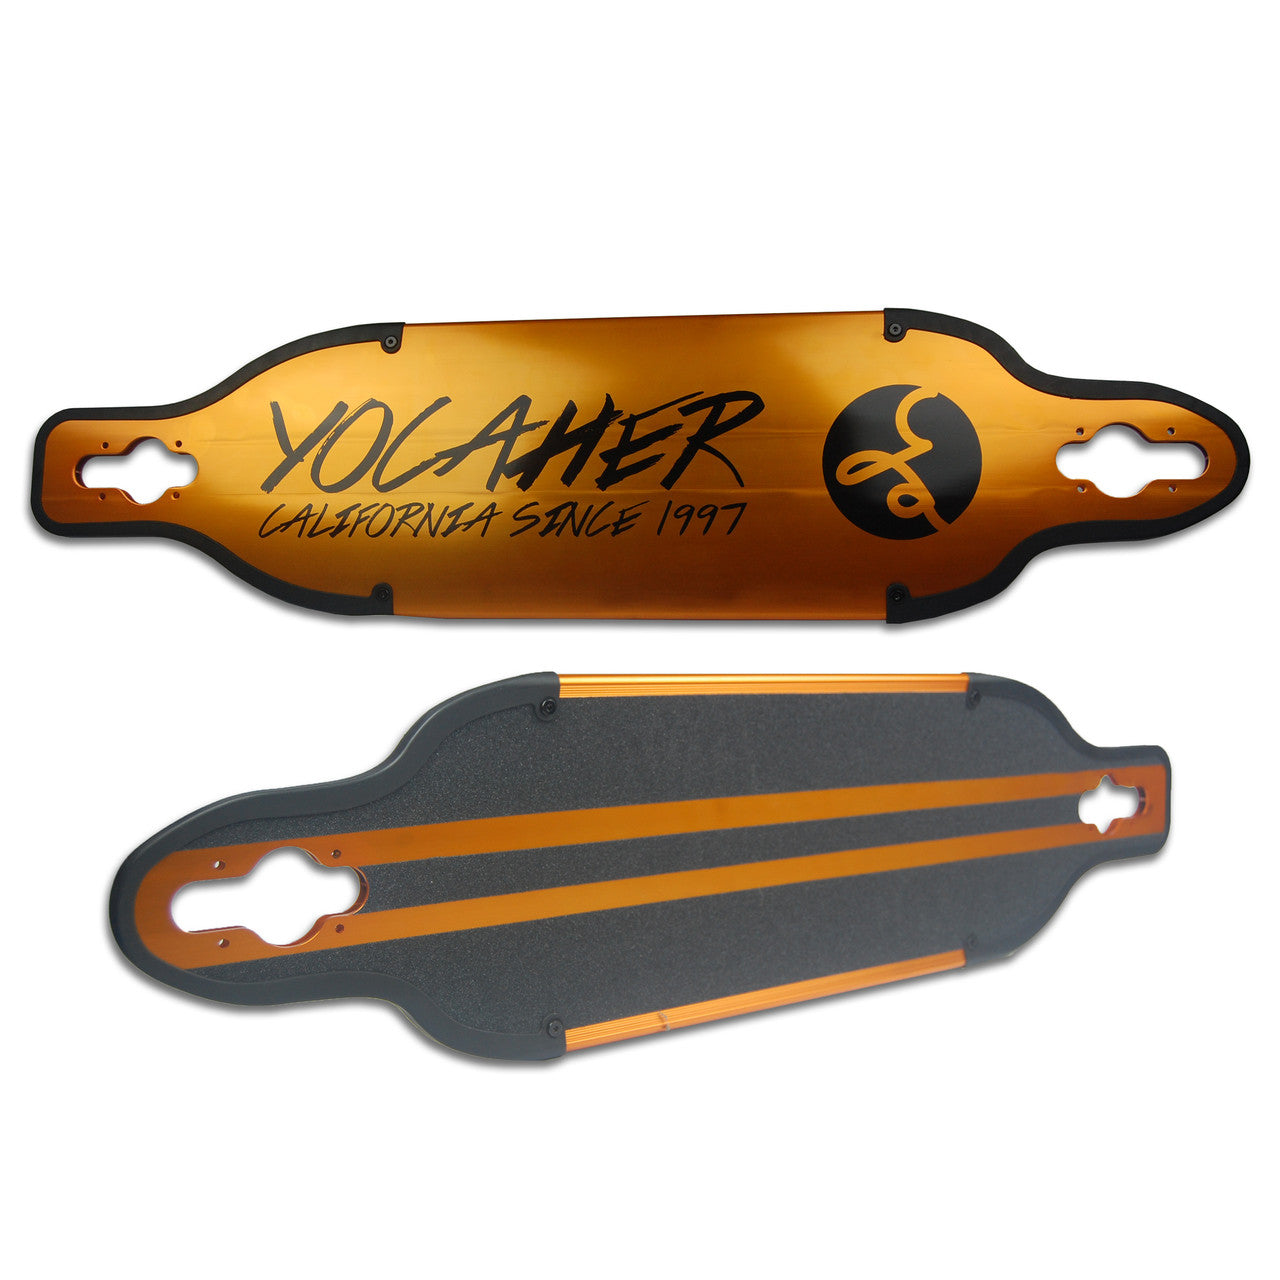 Yocaher Aluminum Drop Through longboard Deck - Gold